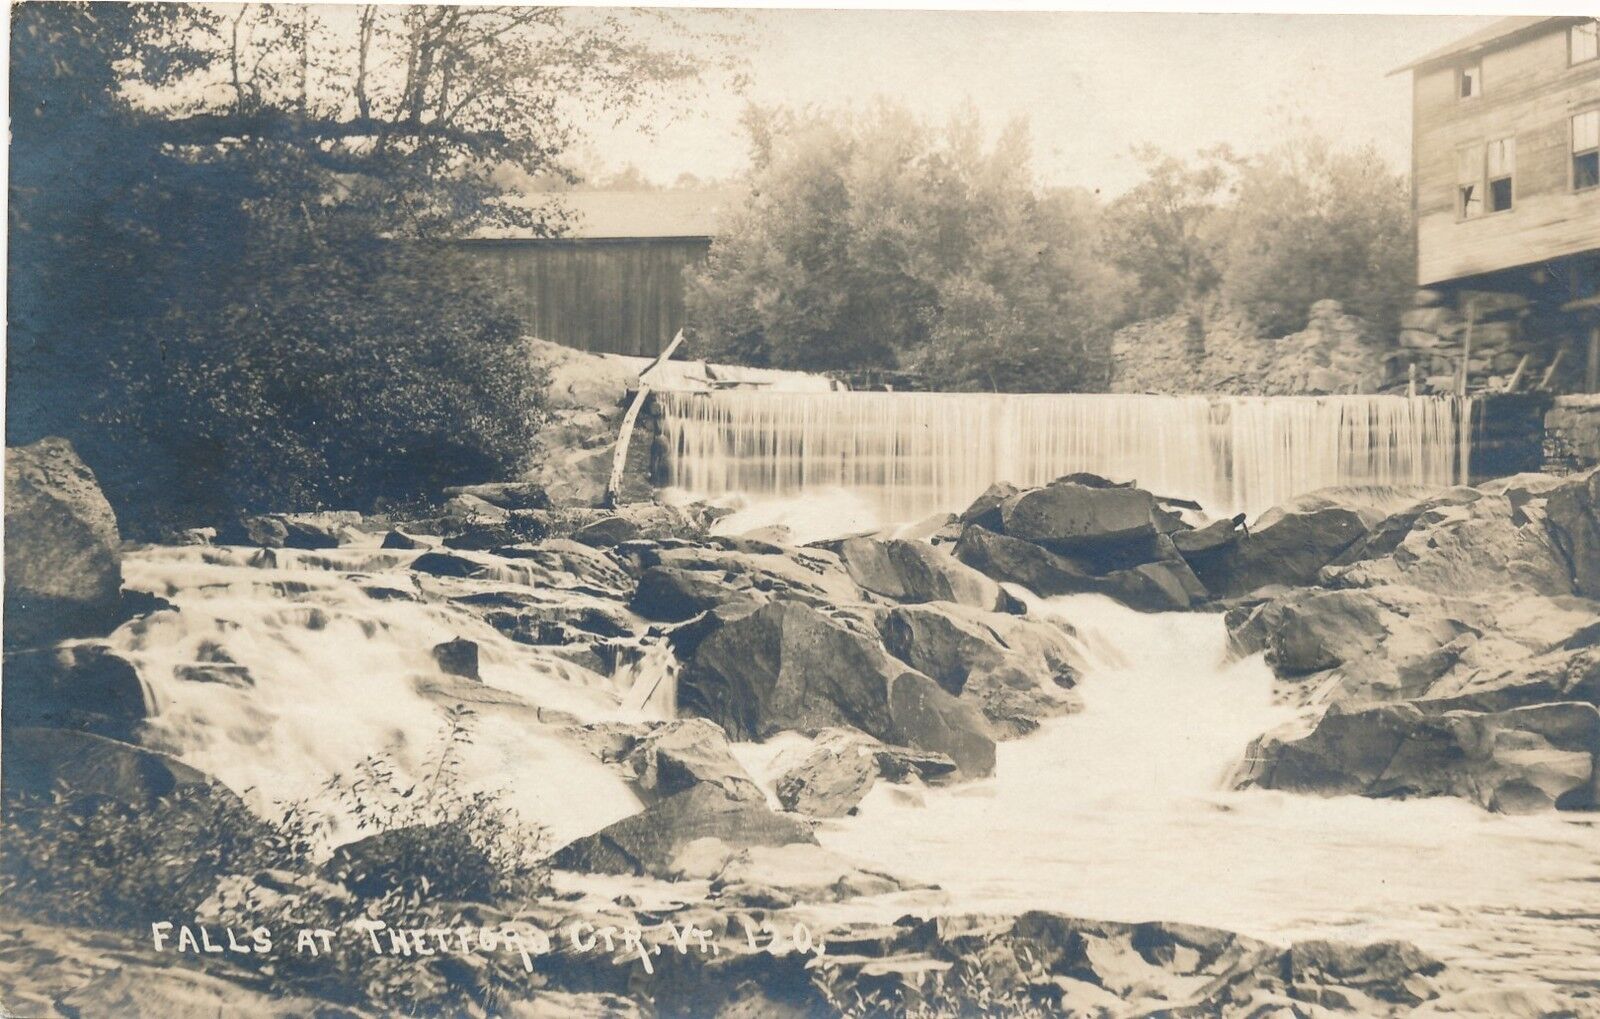 THETFORD CENTER VT – Falls at Thetford Center Real Photo Postcard rppc - 1921